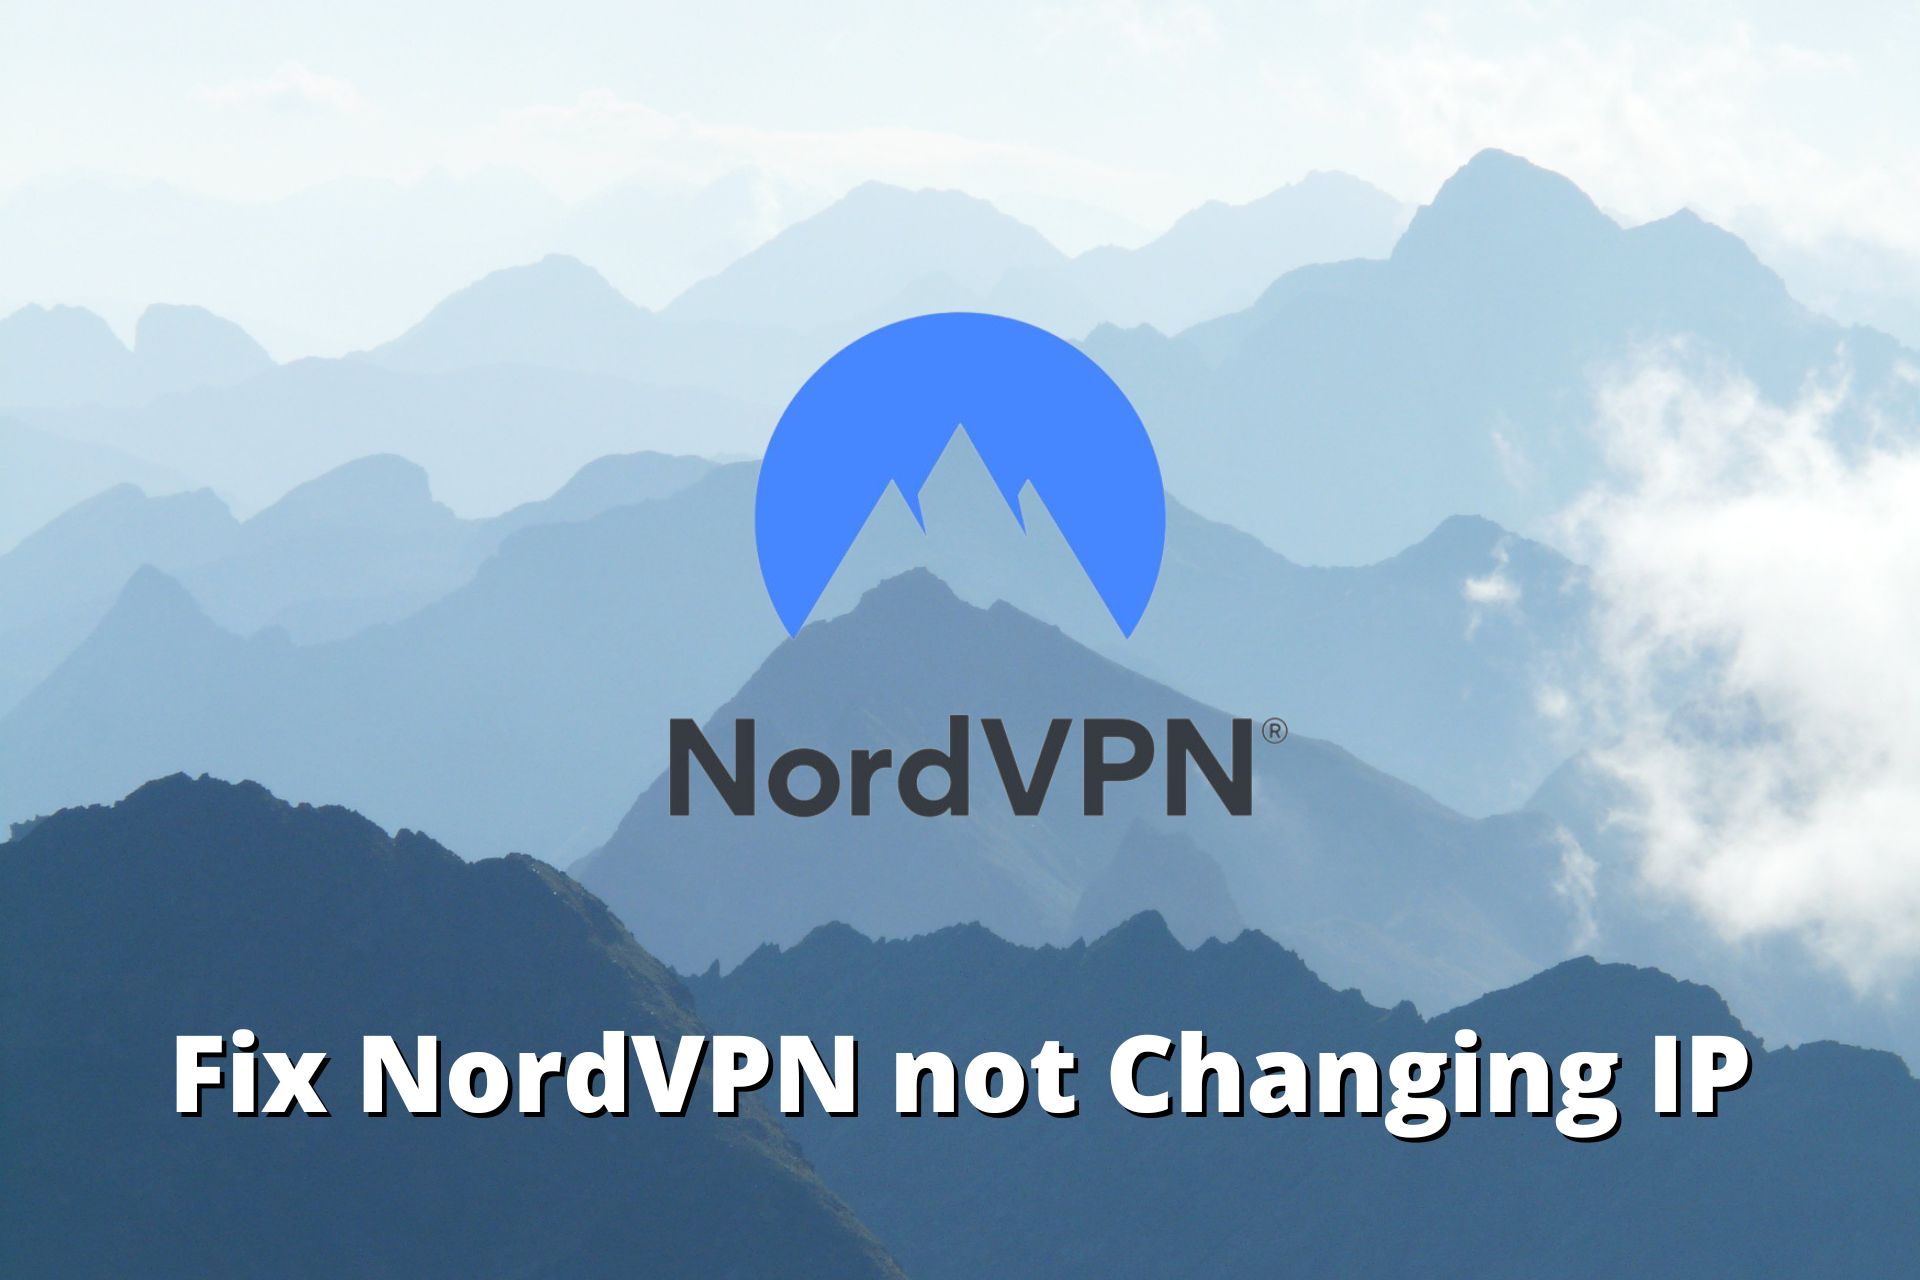 nordvpn assigning ip address stuck